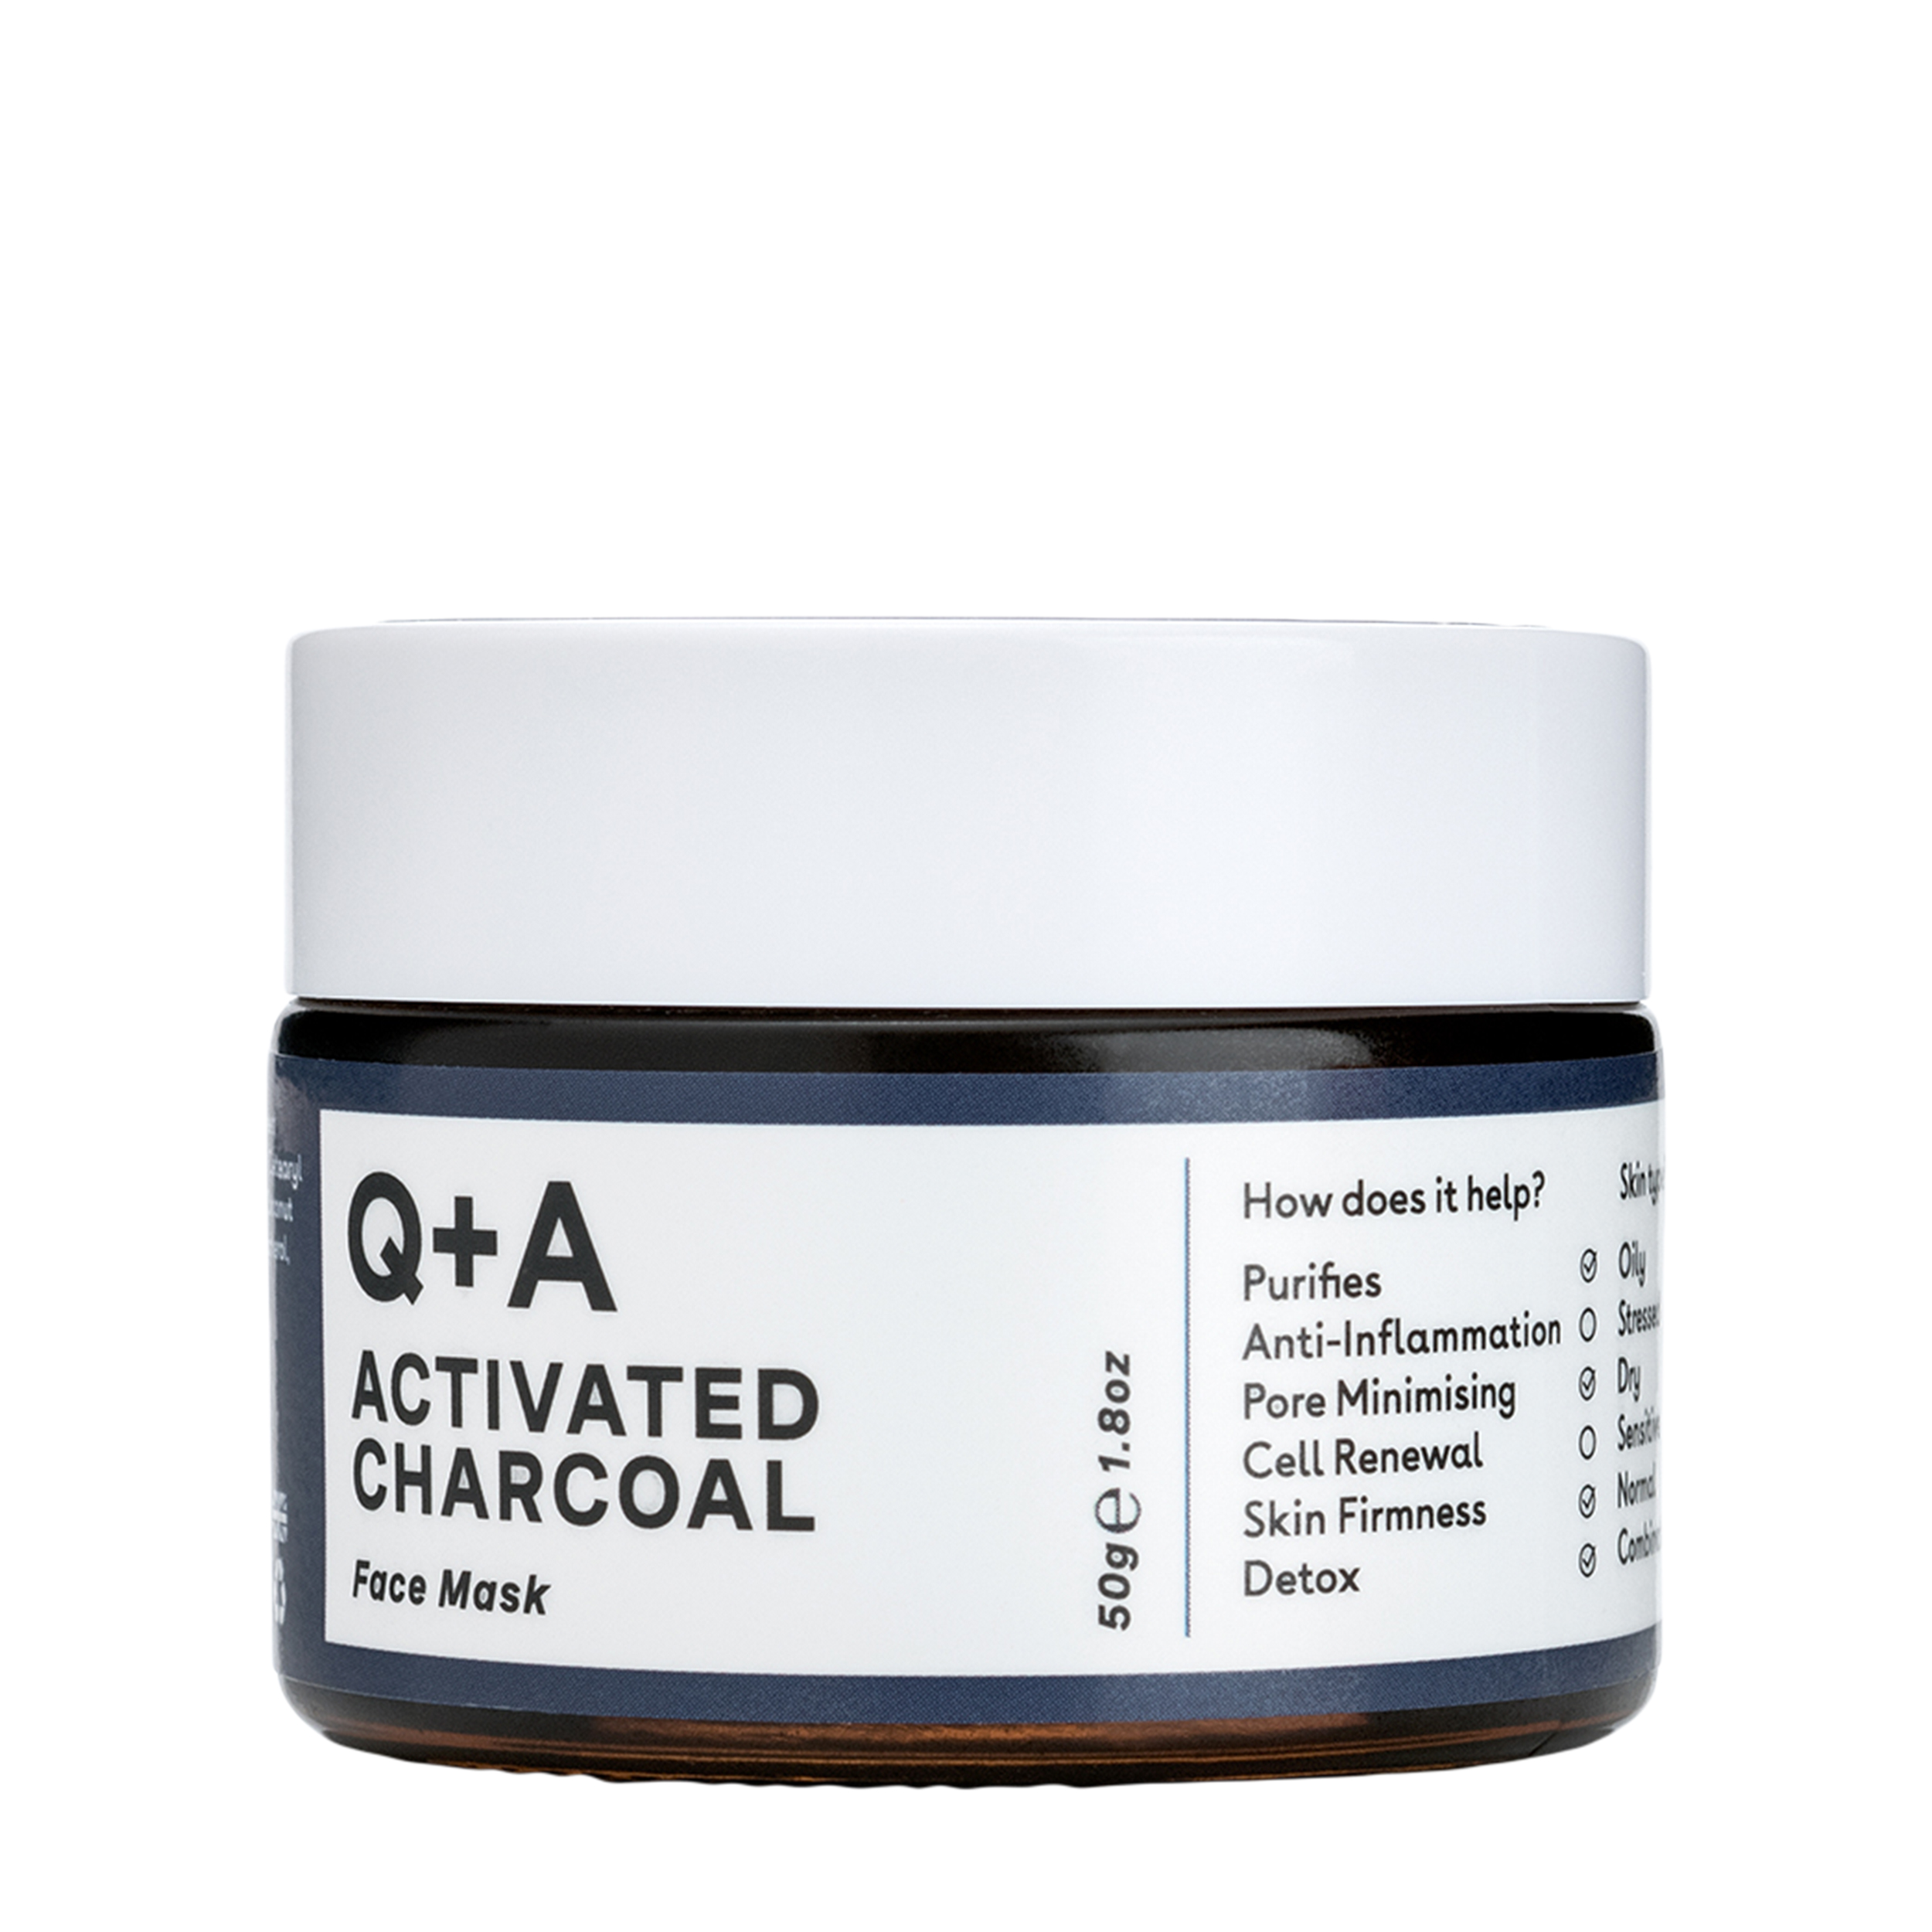 Q+A Q+A Очищающая маска для лица Activated Charcoal 50 гр QAACFM - фото 1